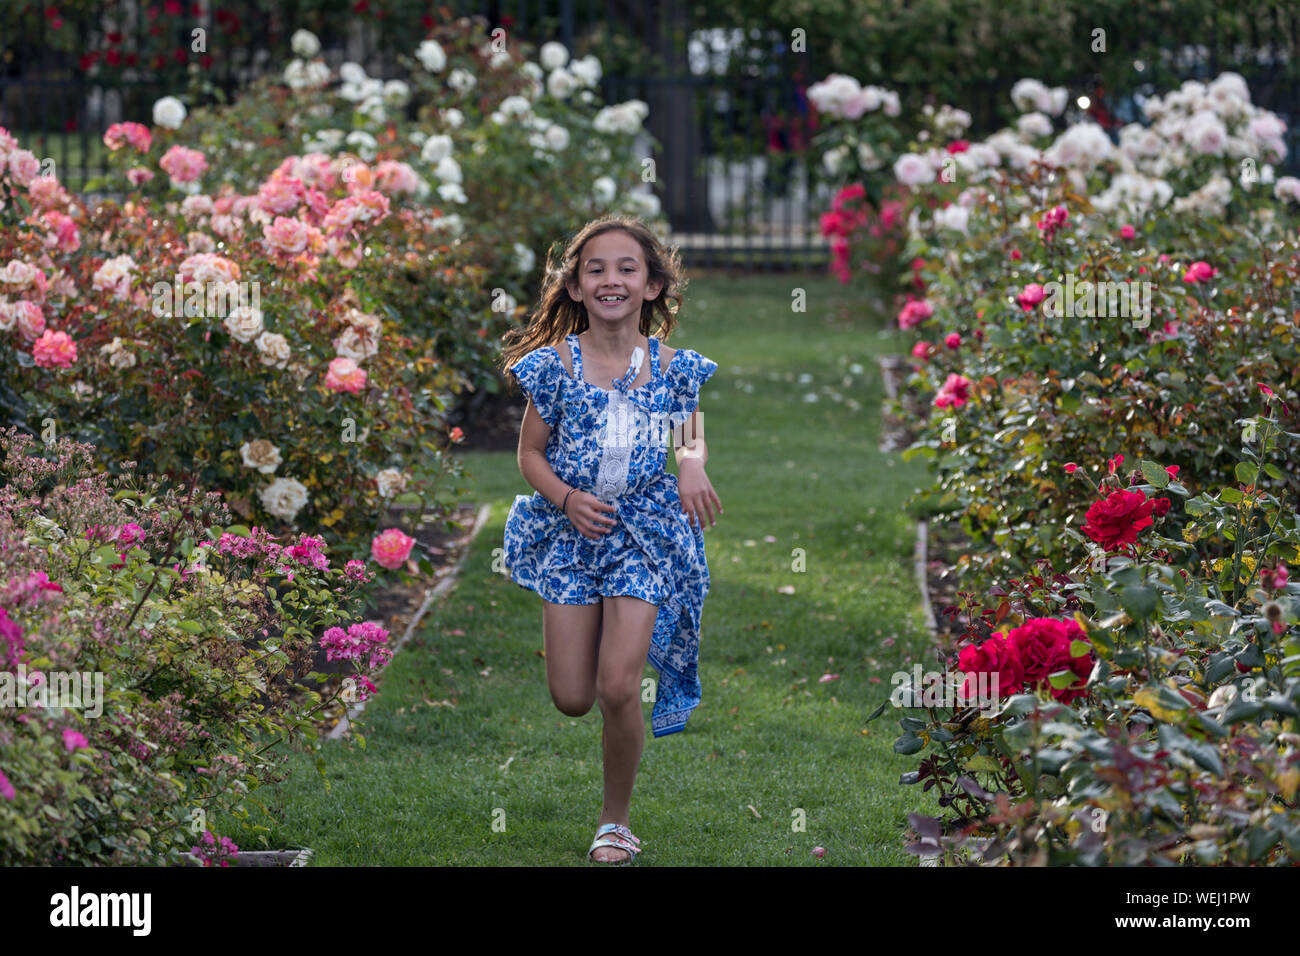 Preteen girl of Asian appearance doing gymnastics in rose garden, San Jose, California Stock Photo